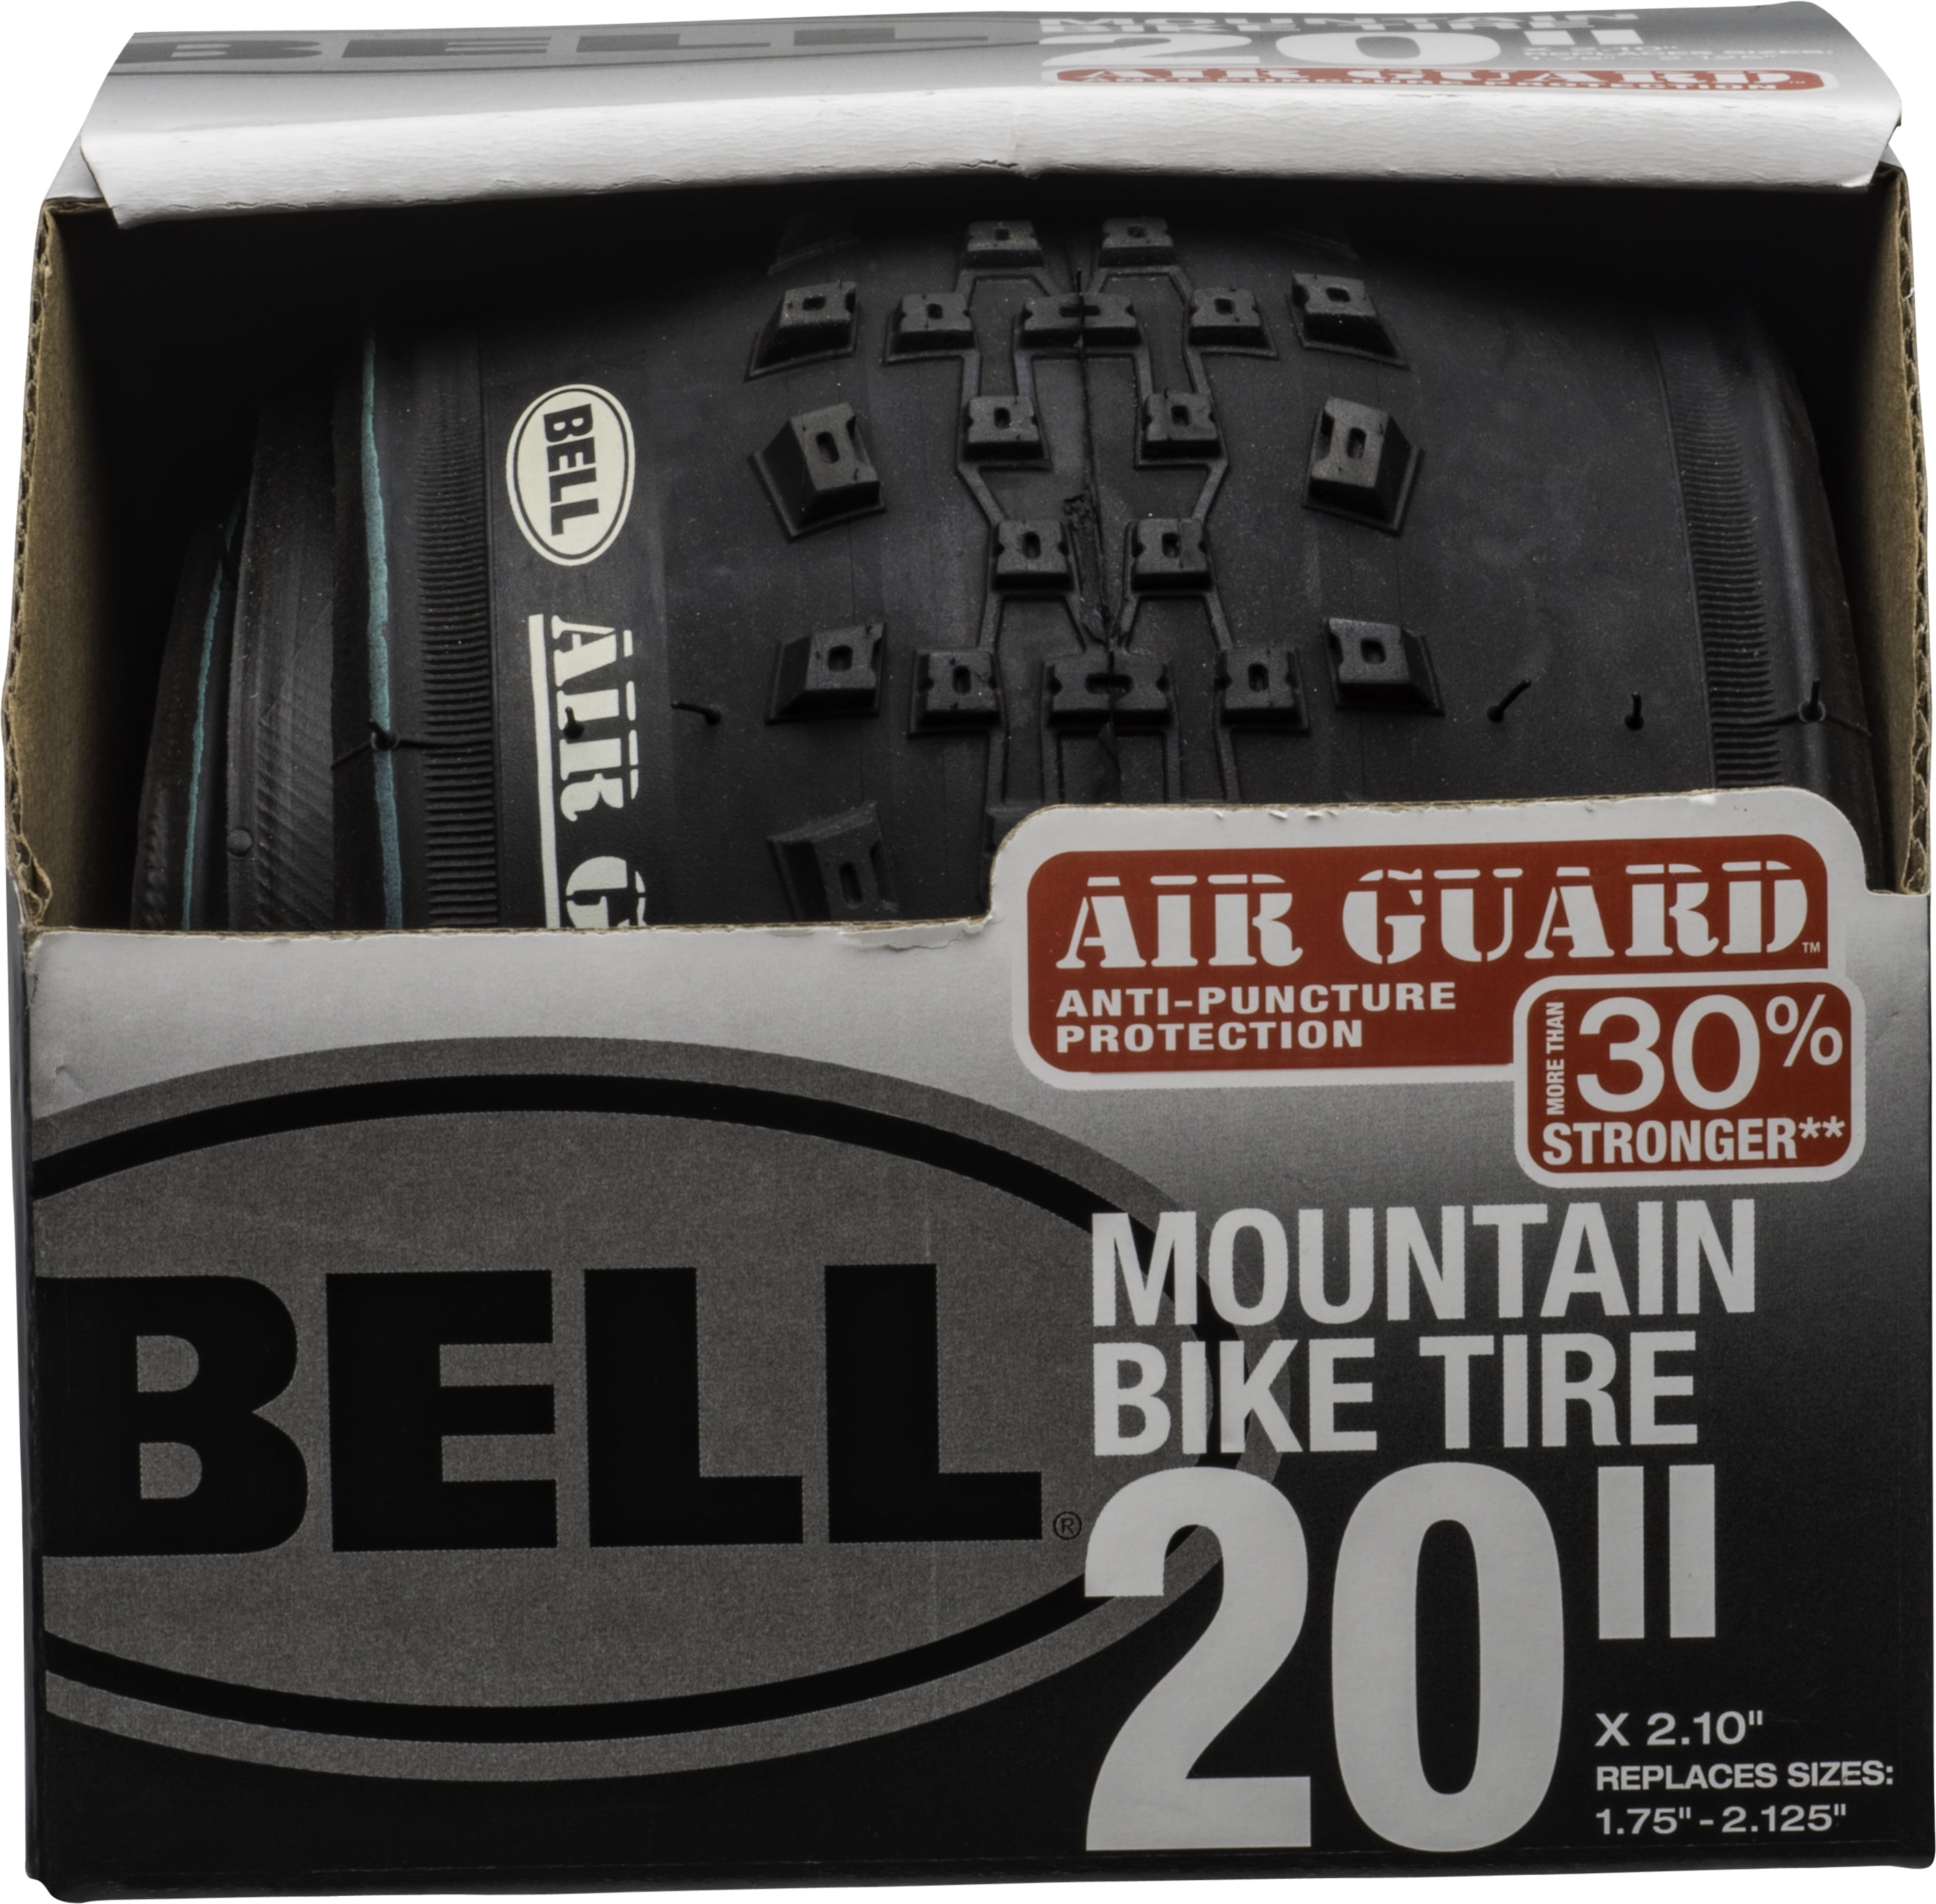 Bell Air Guard Anti-Puncture Mountain Bike Tire 29" x 1.75"-2.30" NEW!!! Black 